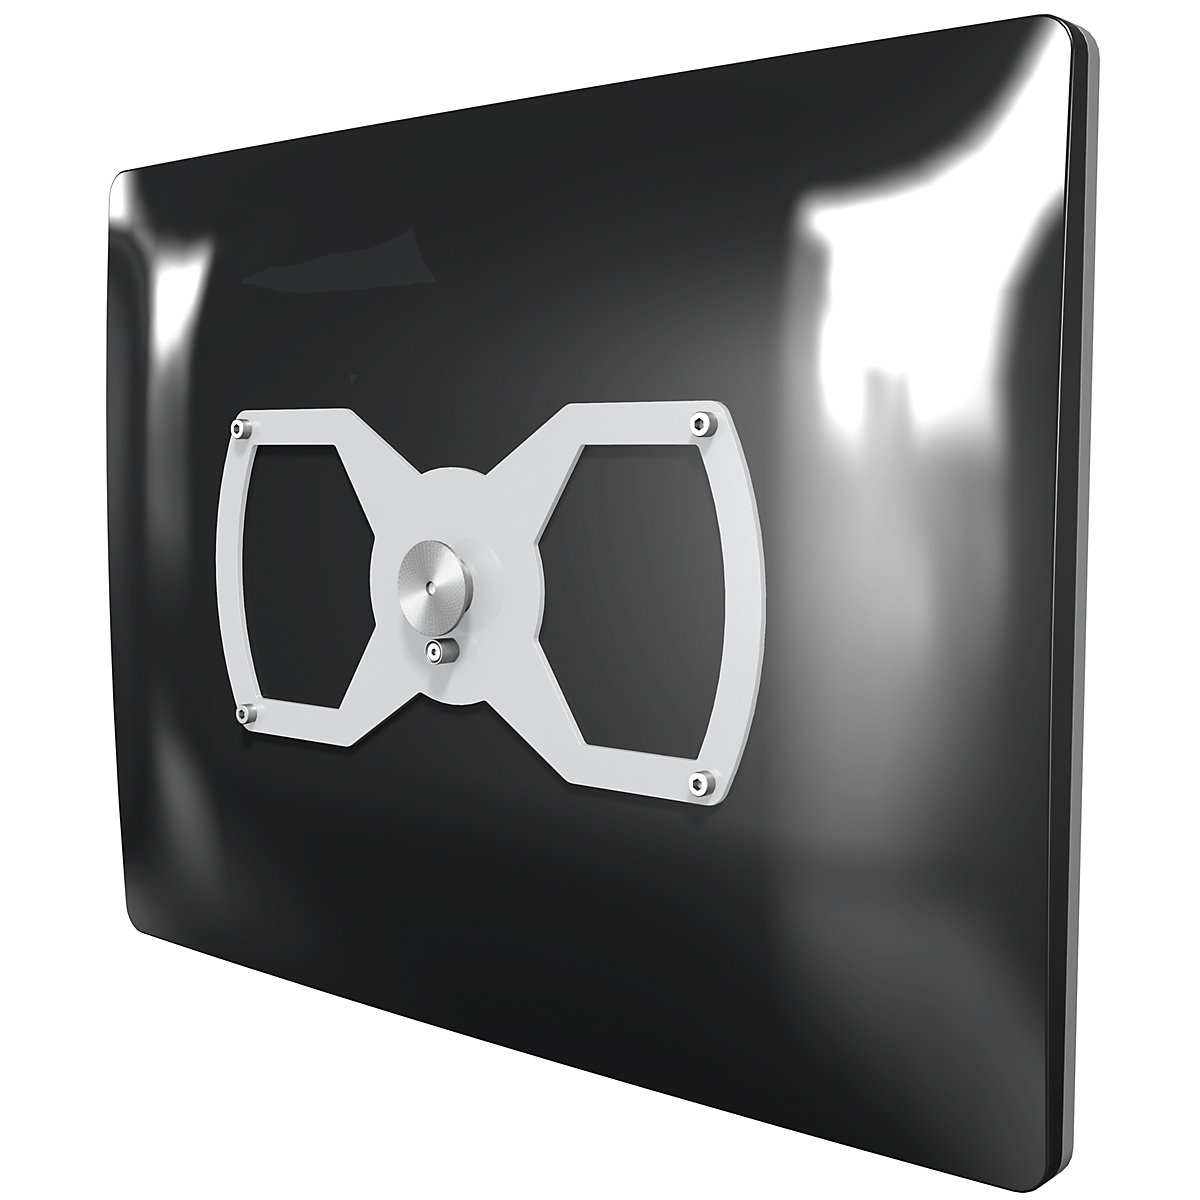 Plaque adaptatrice VIEWLITE – Dataflex, raccord de montage 200 x 100 mm, argent / blanc